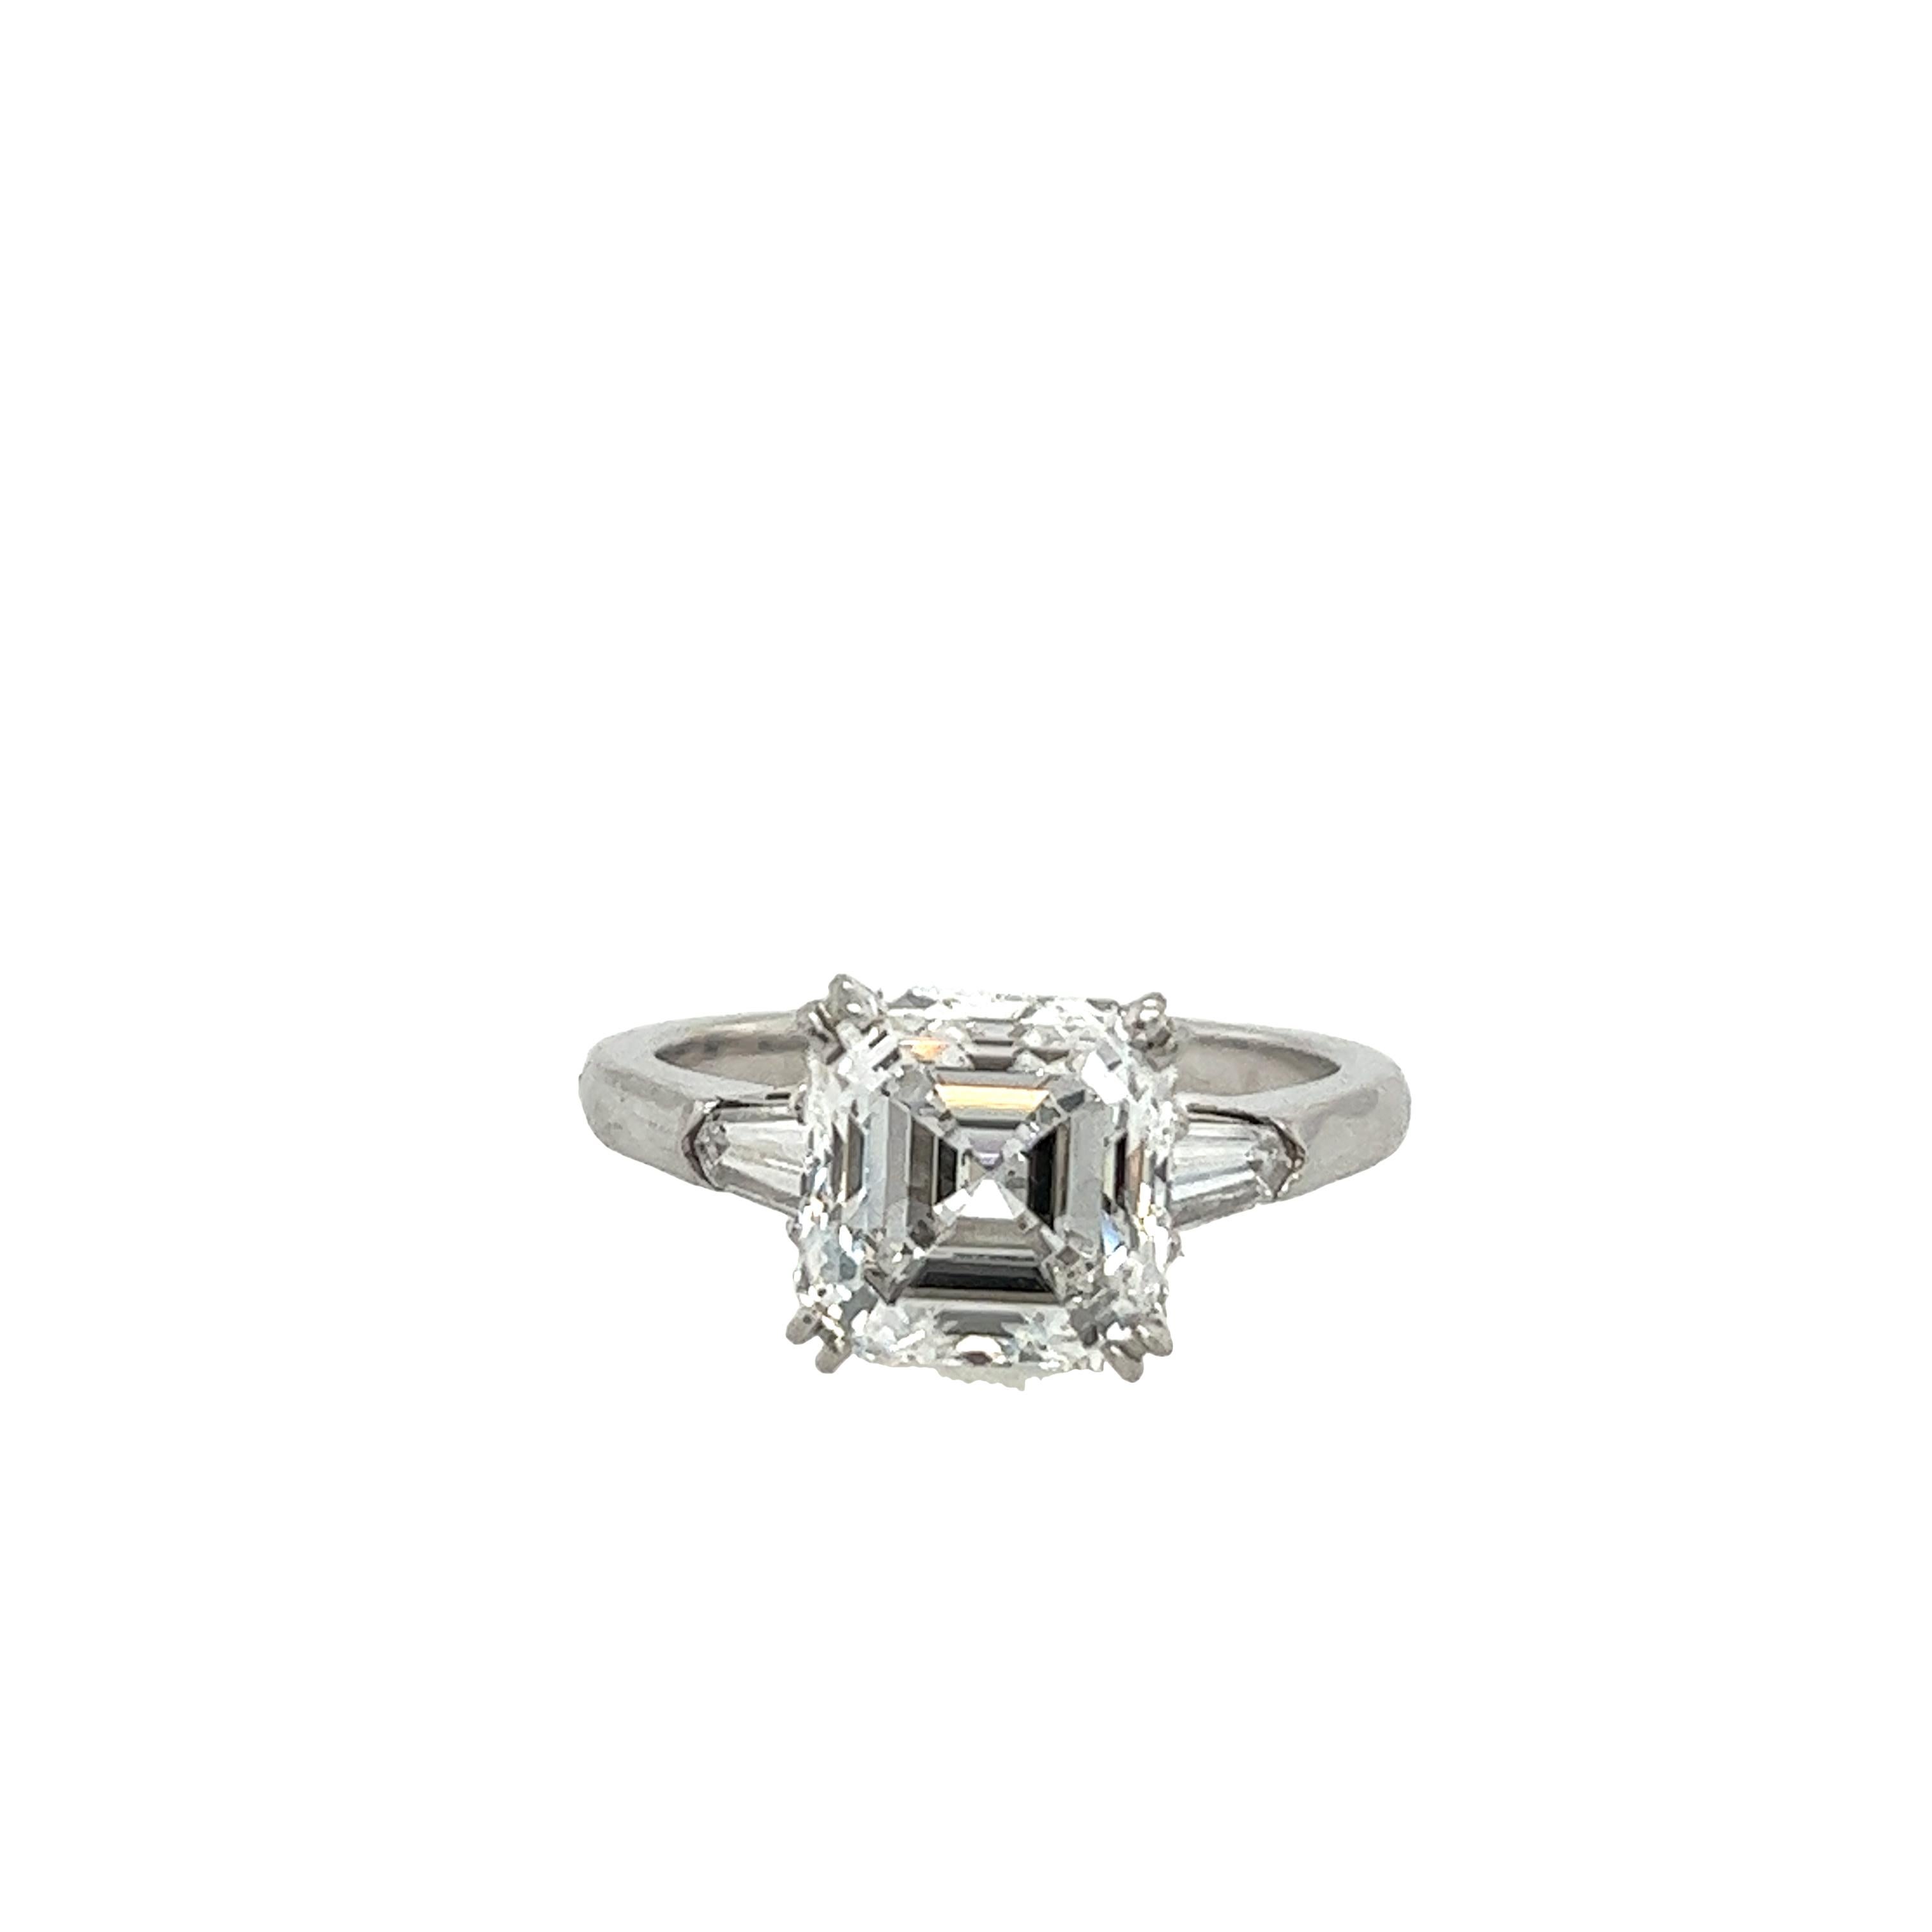 Square Cut Platinum Diamond Engagement Ring With 3.23ct E/VS2 Square Emerald Cut Diamond